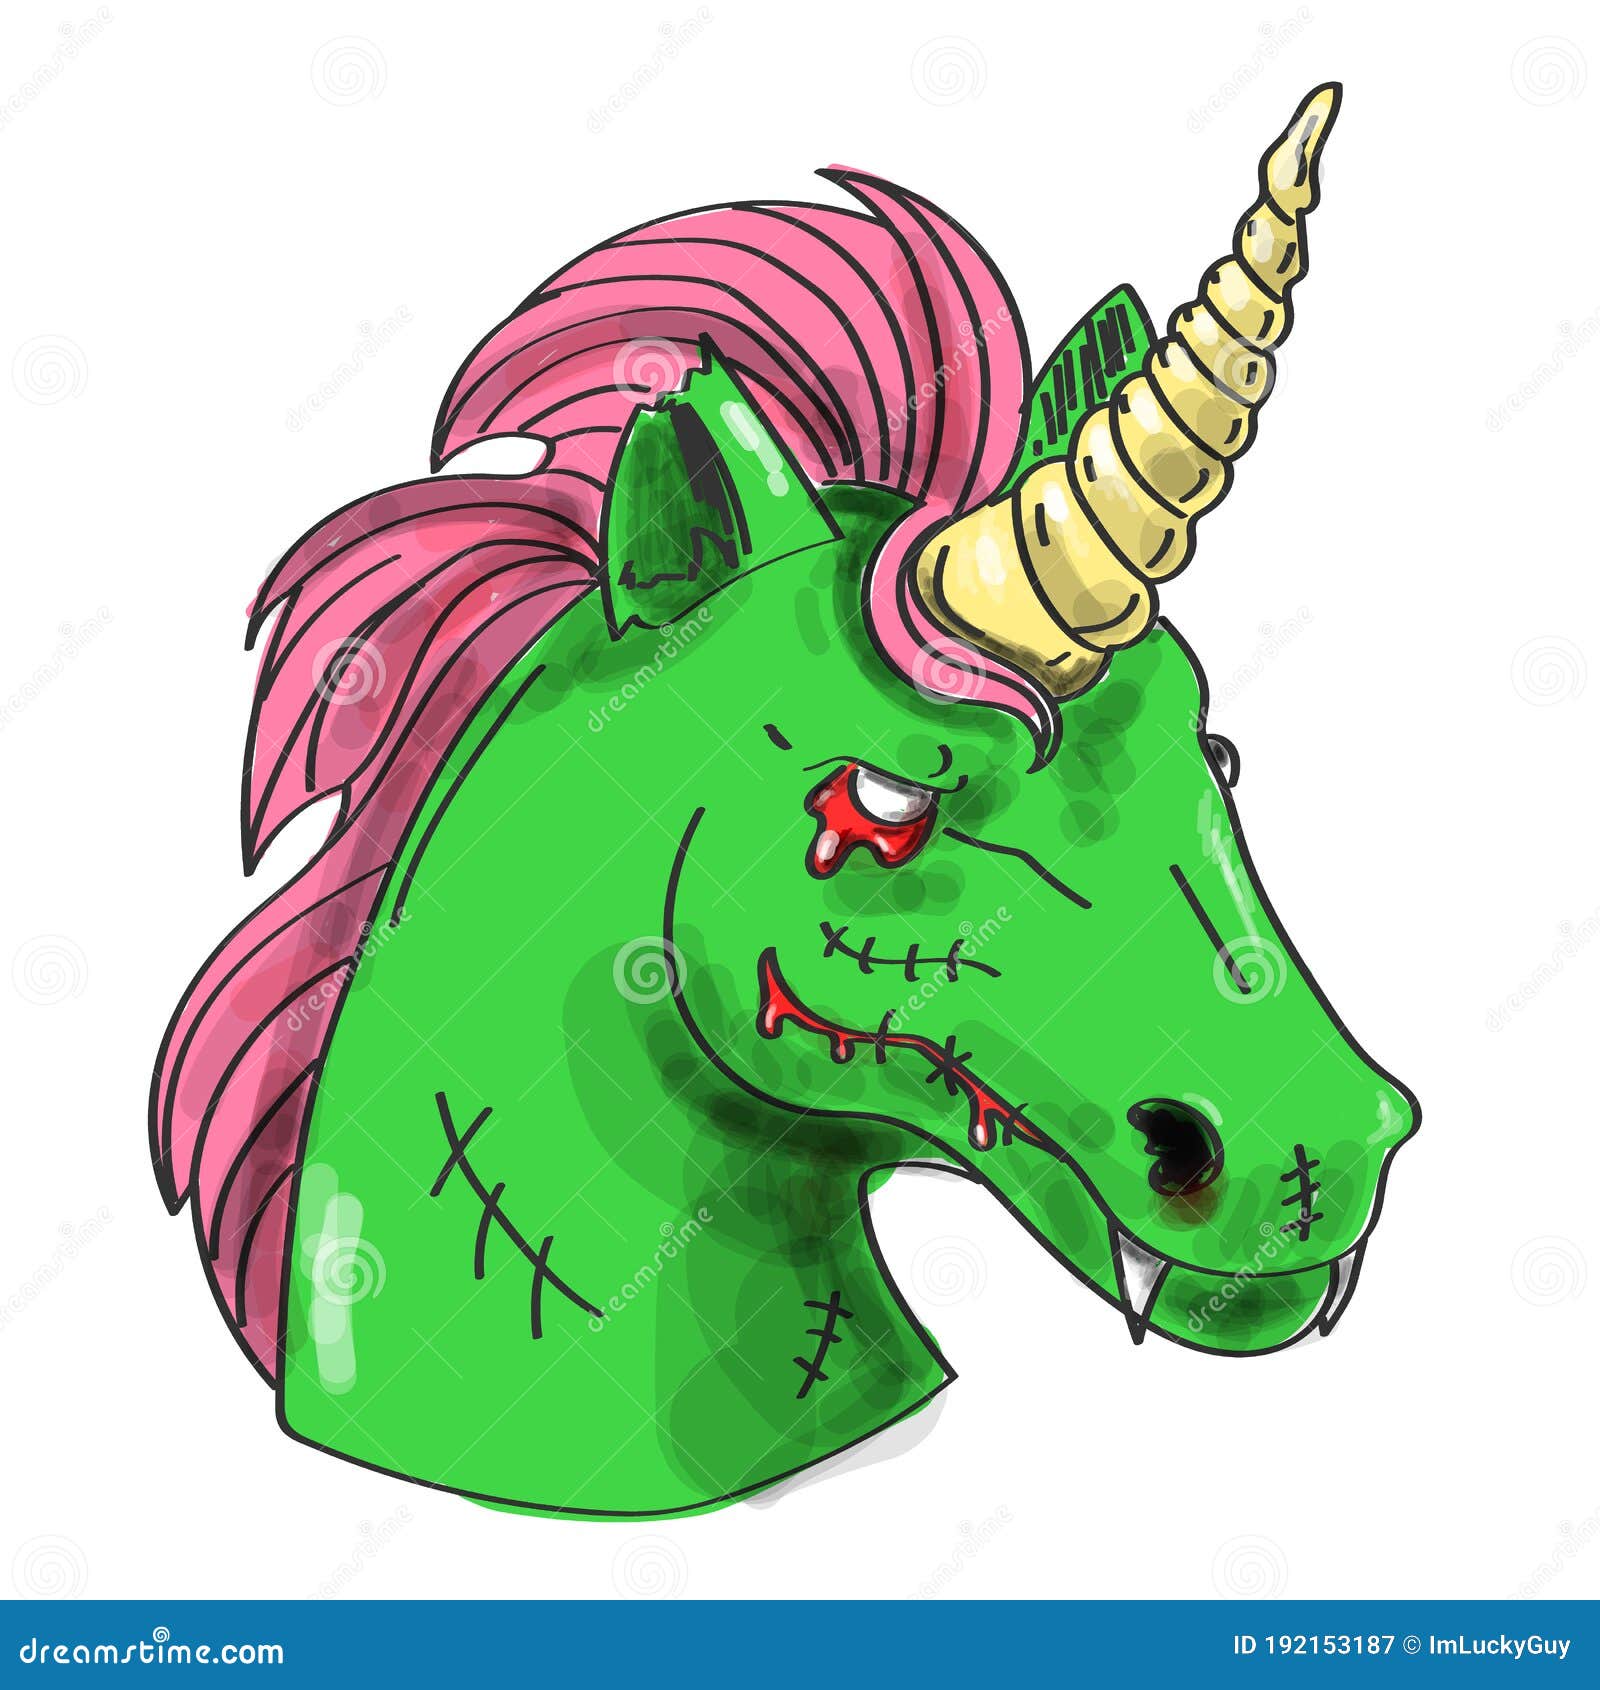 zombie unicorn tattoo design by Foreigner227 on DeviantArt